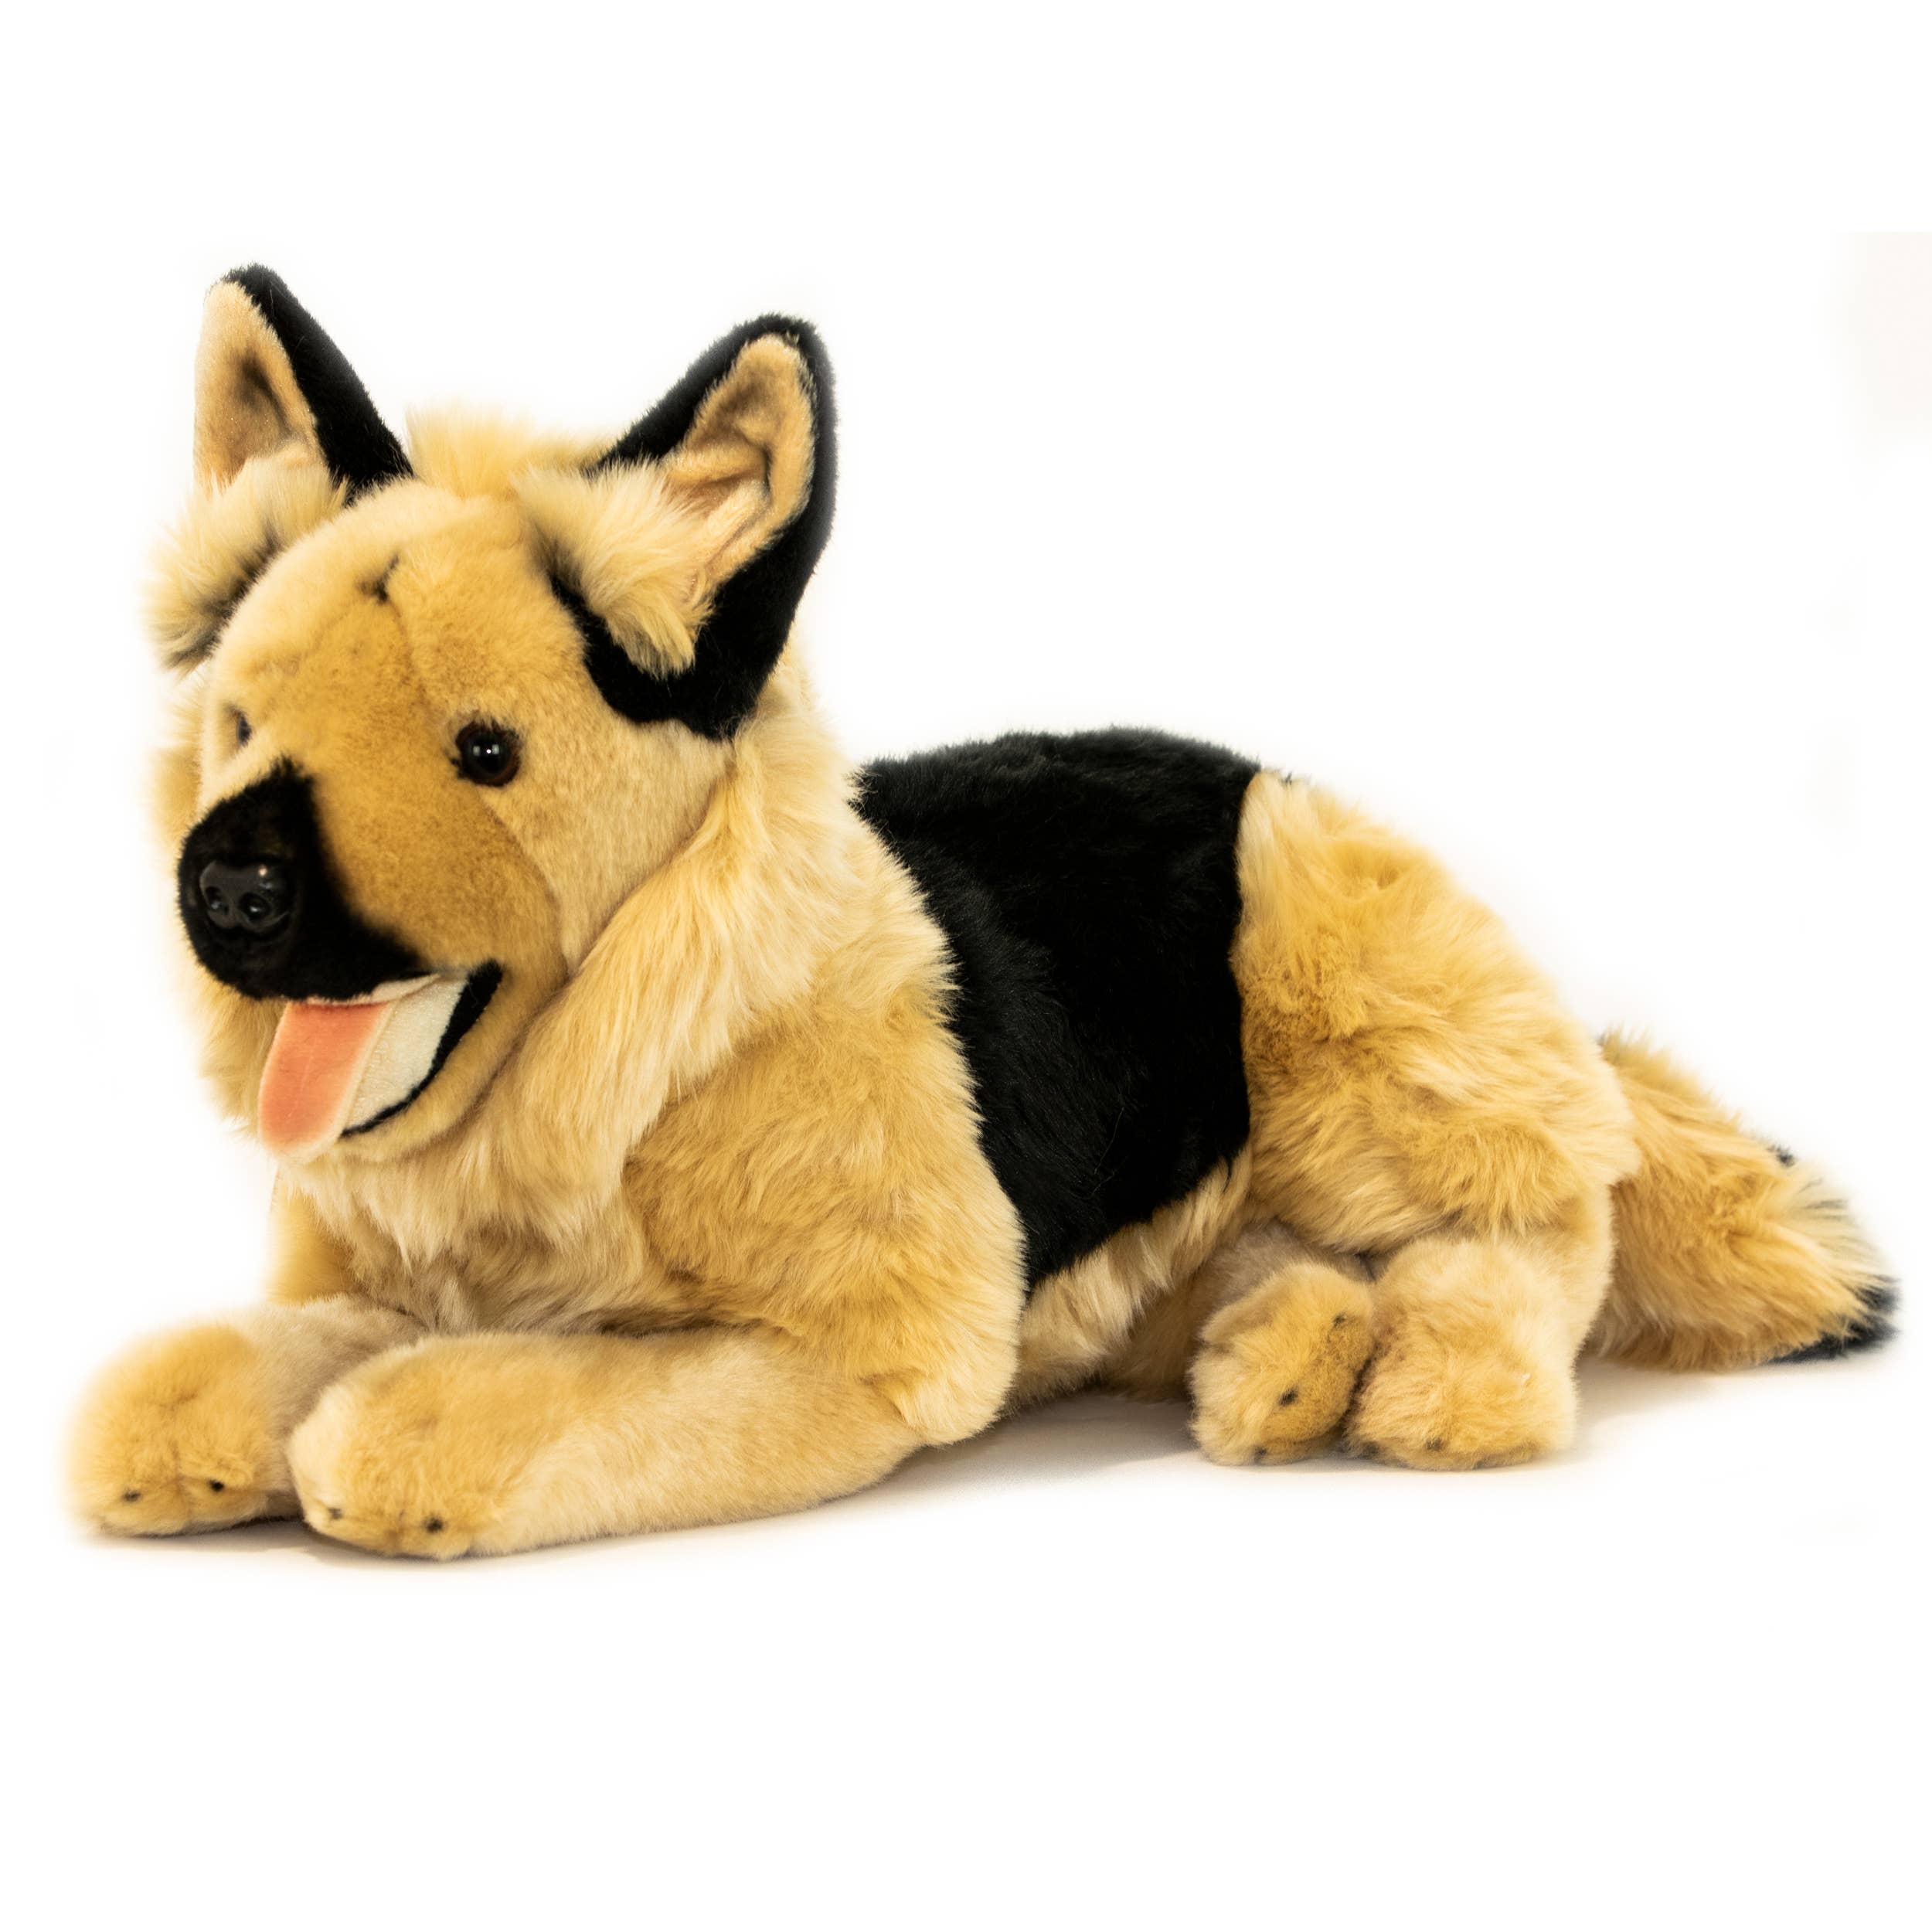 King - German Shepherd plush dog toy    Size 42cm/16.5"